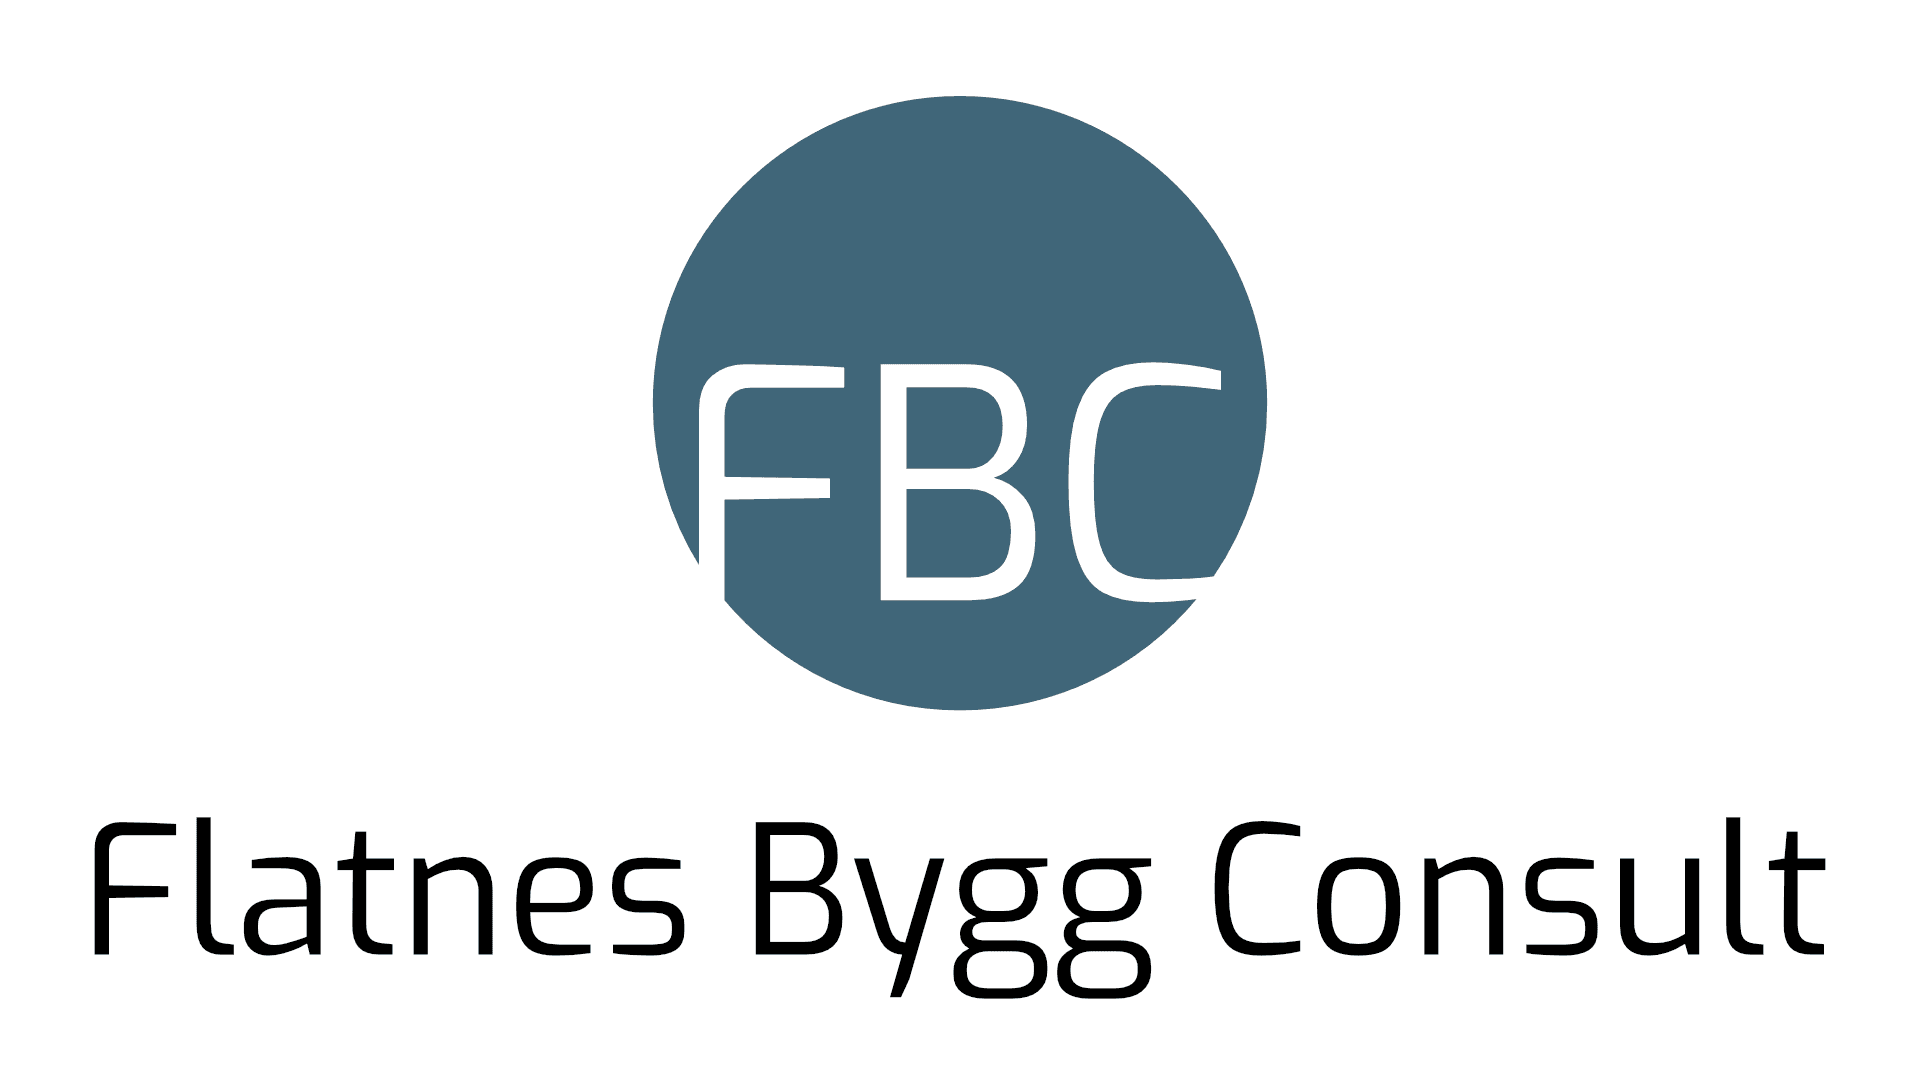 Om FBC - Flatnes Bygg konsult